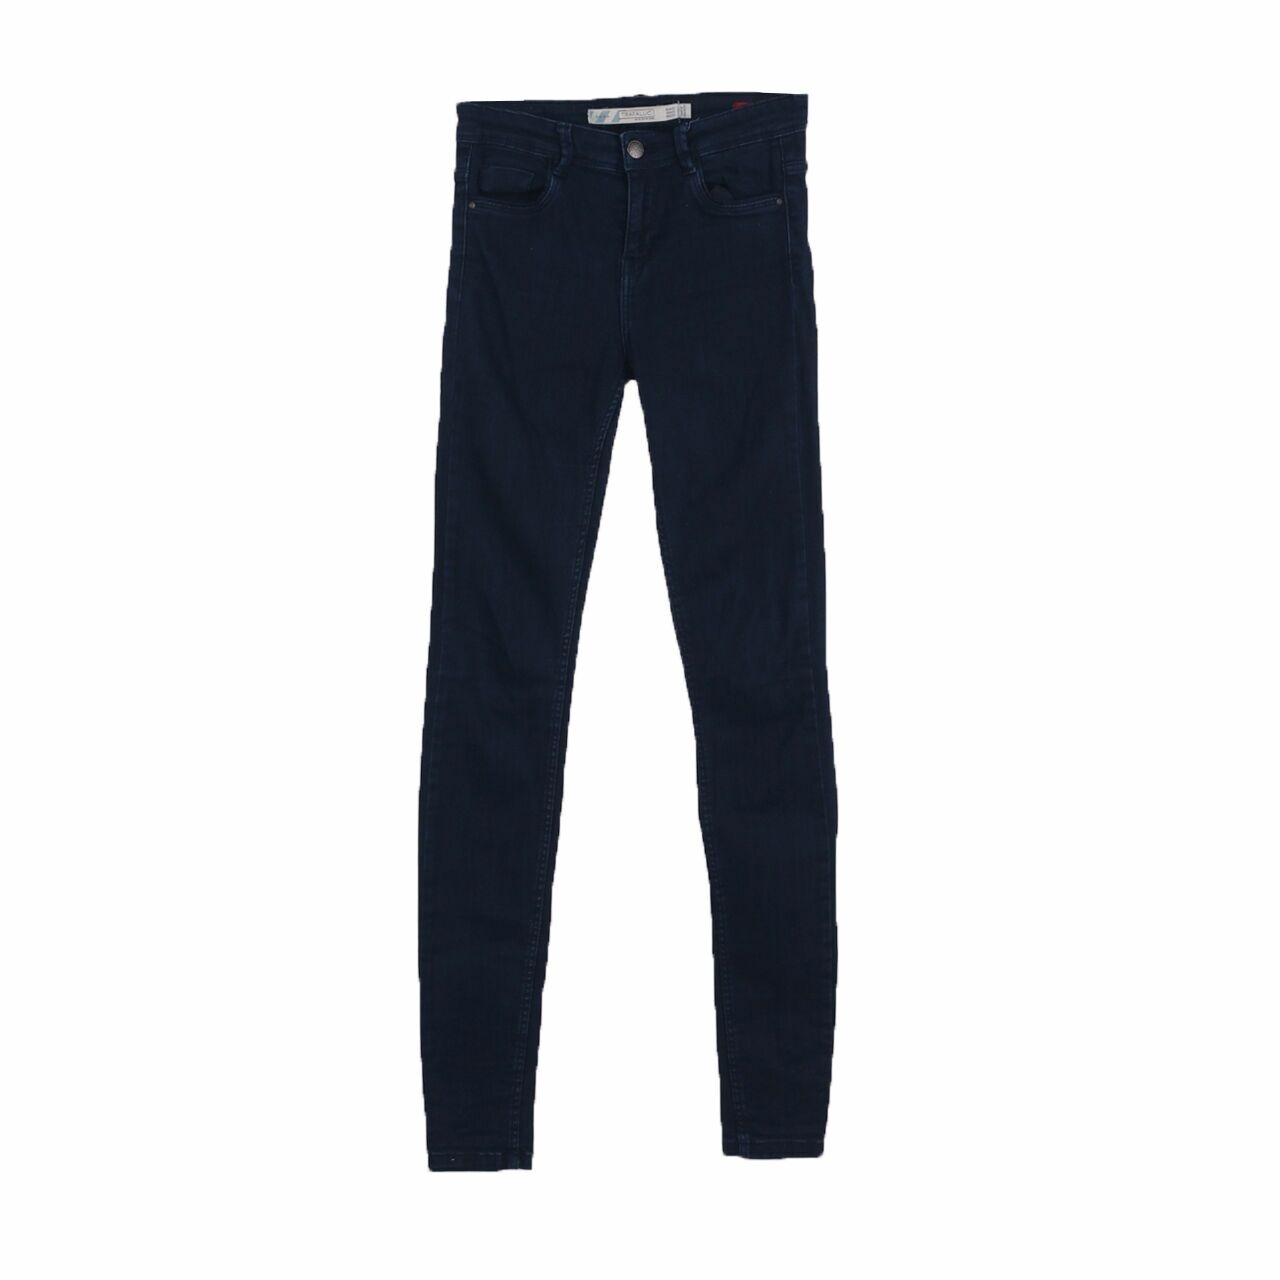 Zara Navy Jeans Long Pants